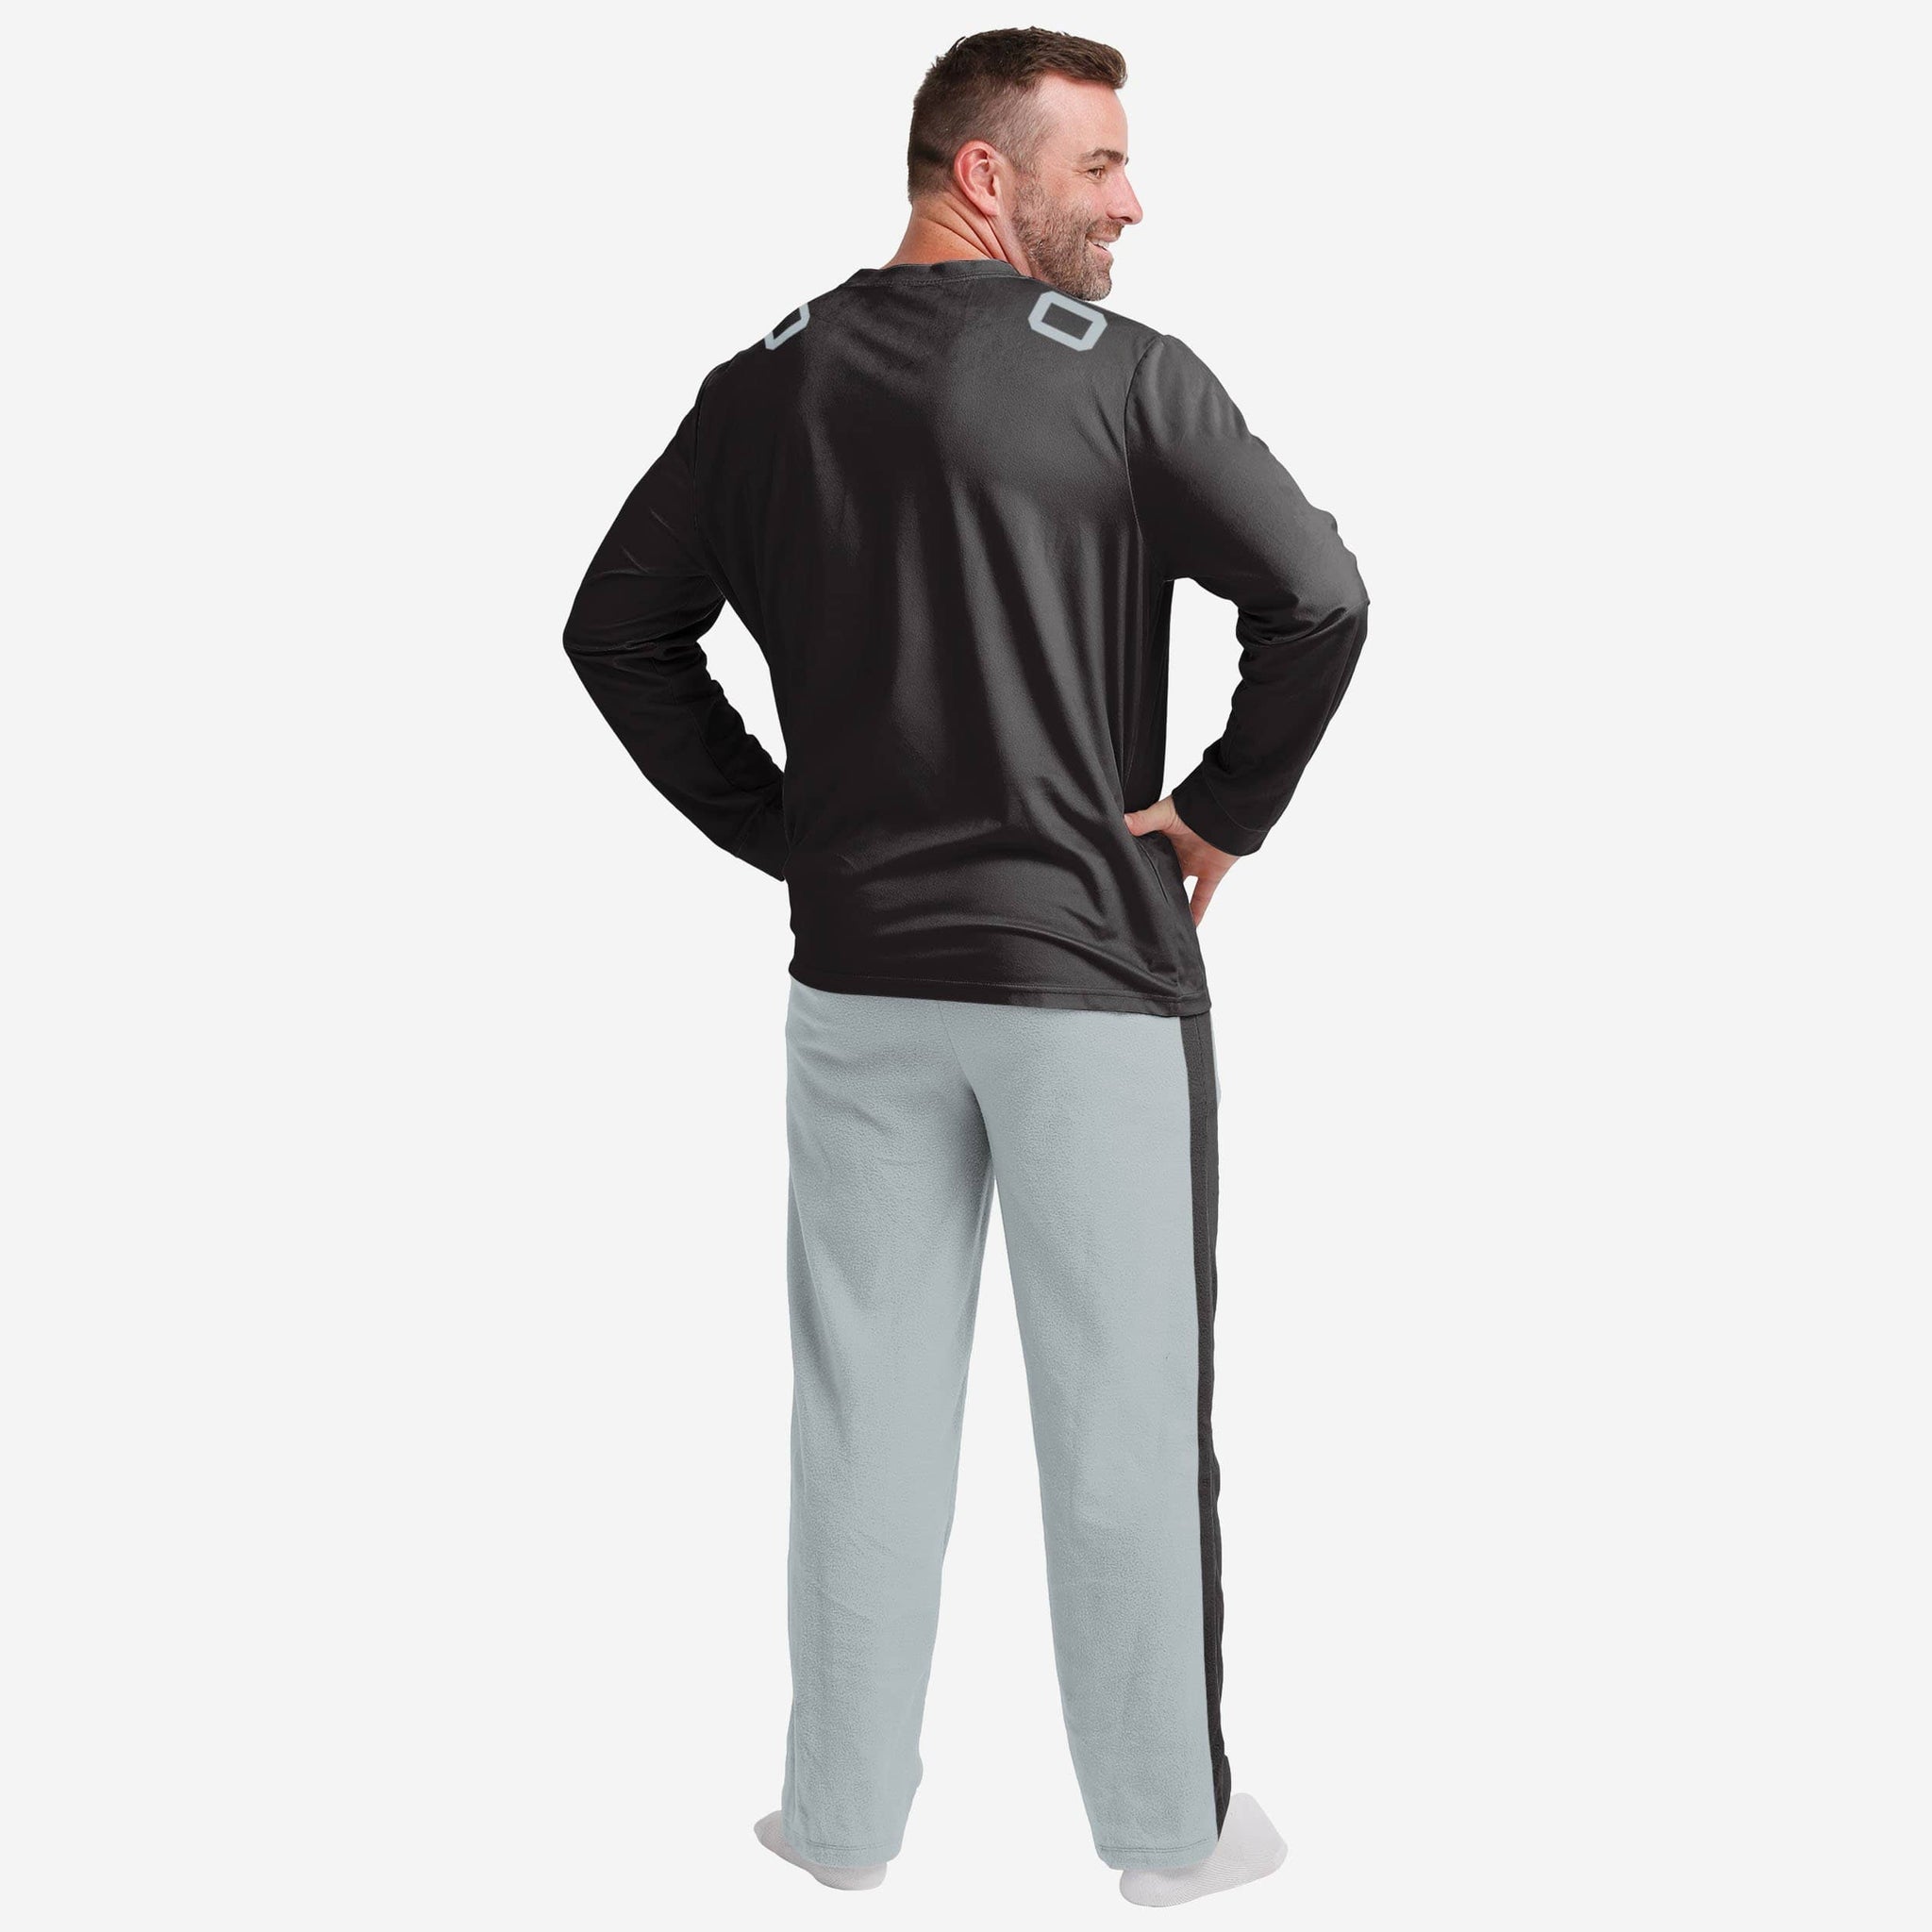  FOCO NFL Las Vegas Raiders Men's Pajama Shirt and Pants Lounge  Set : Sports & Outdoors